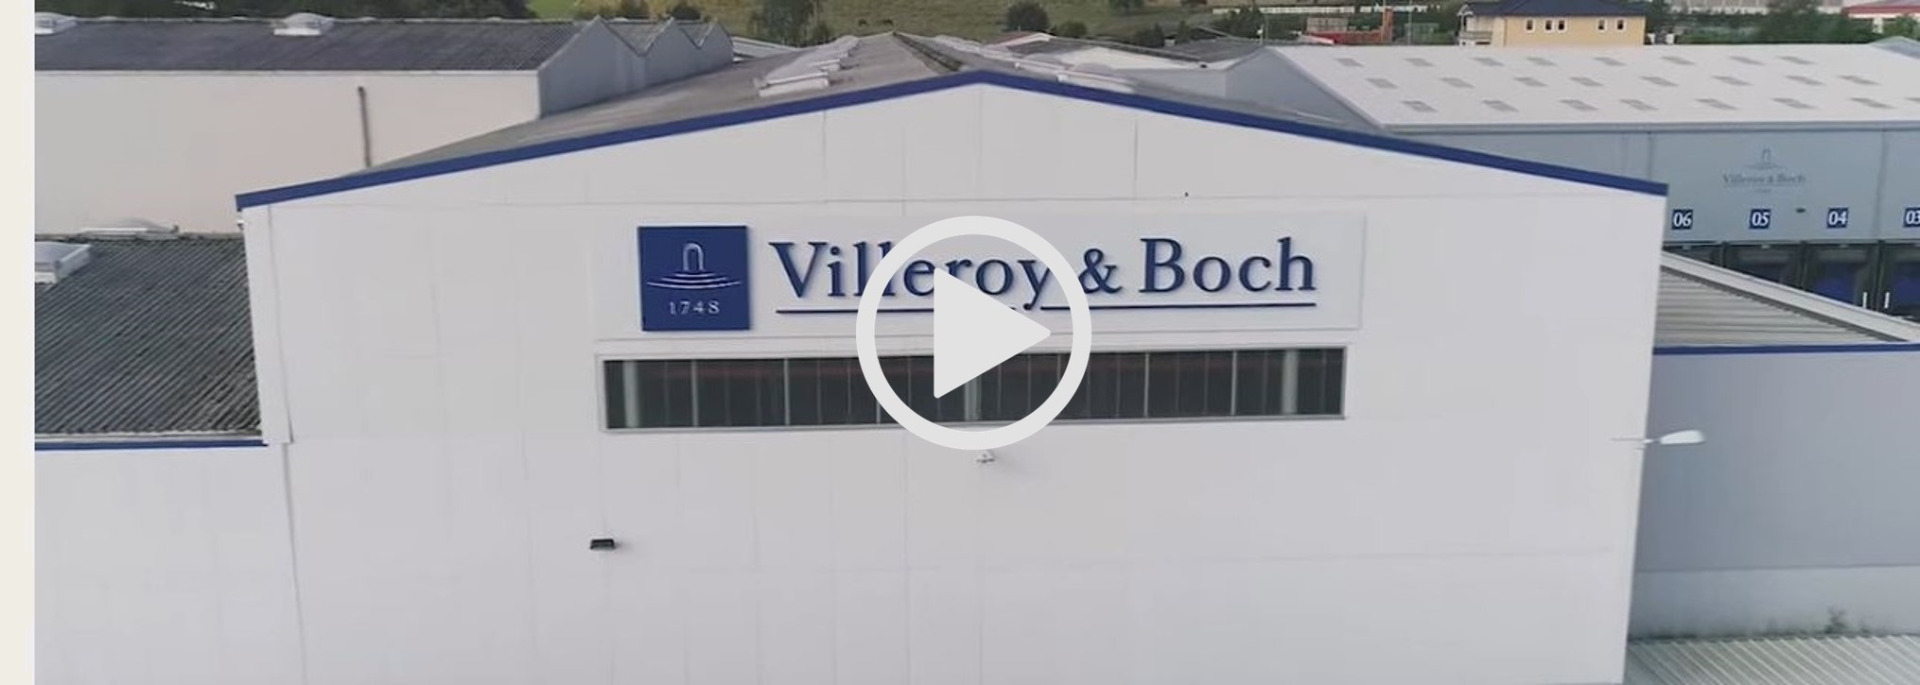 Villeroy and Boch film for bathroom ceramic production